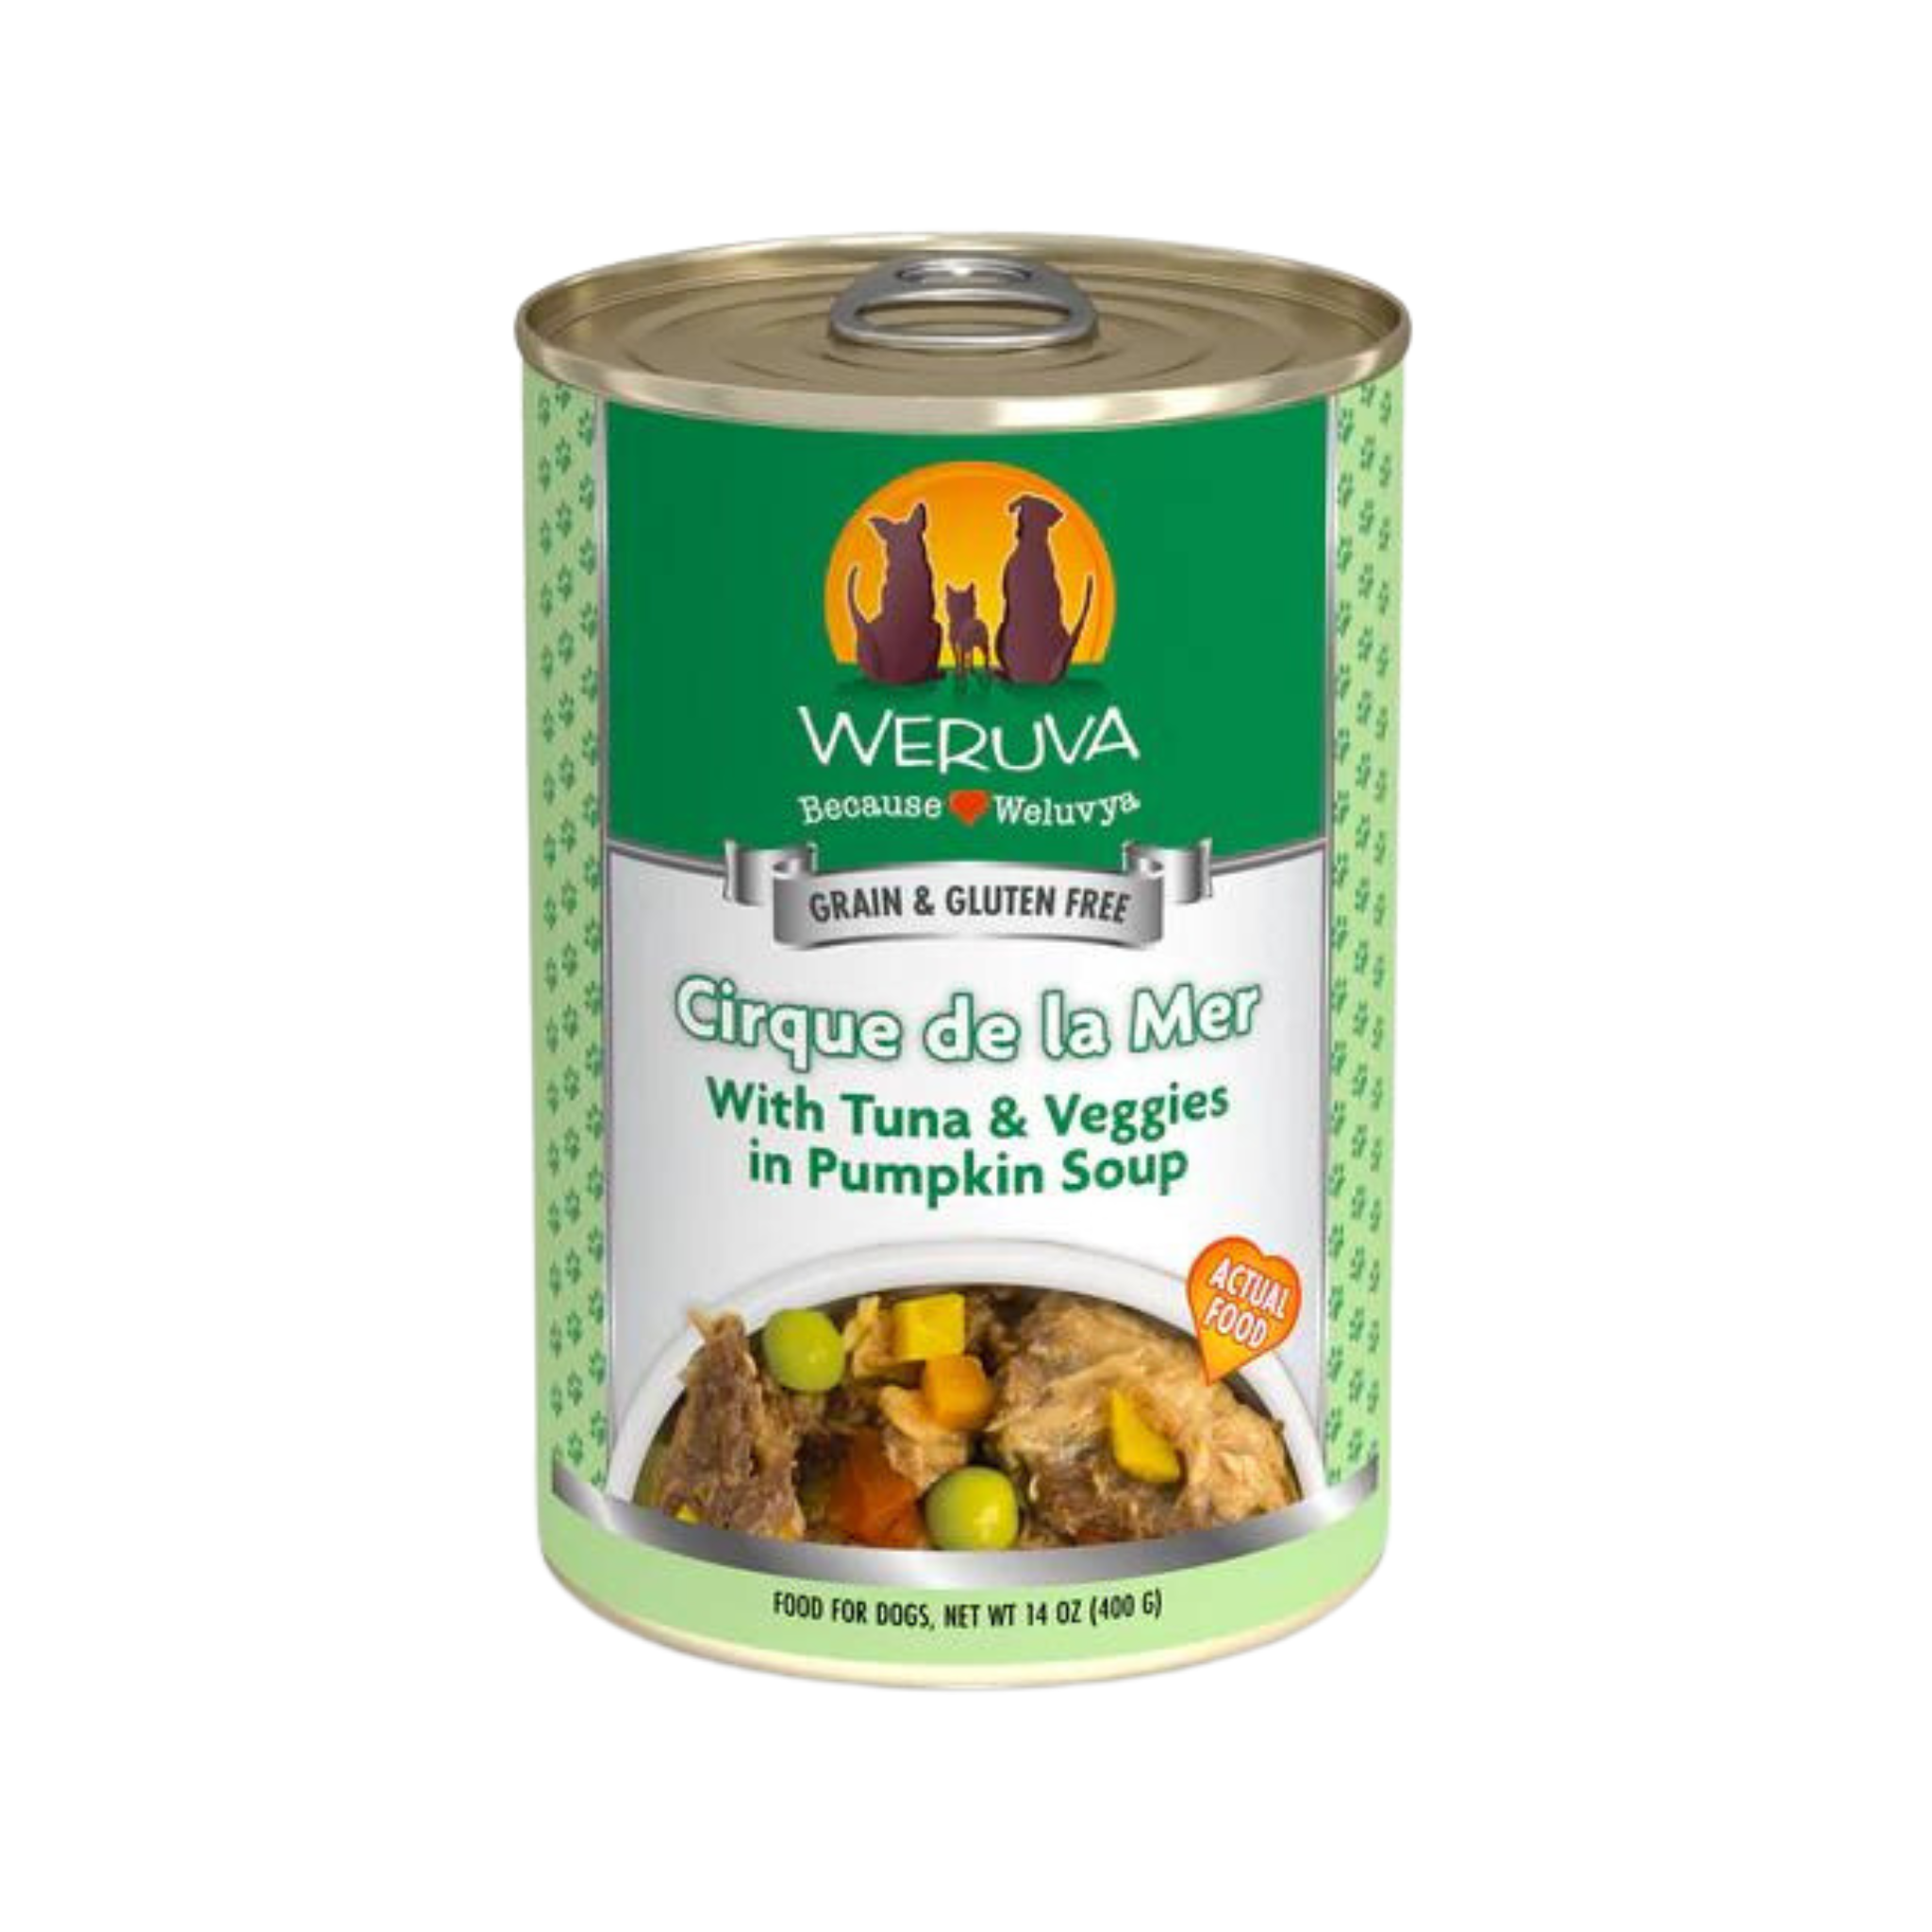 Weruva Cirque De La Mer Tuna & Veggies In Pumpkin Soup Dog Canned